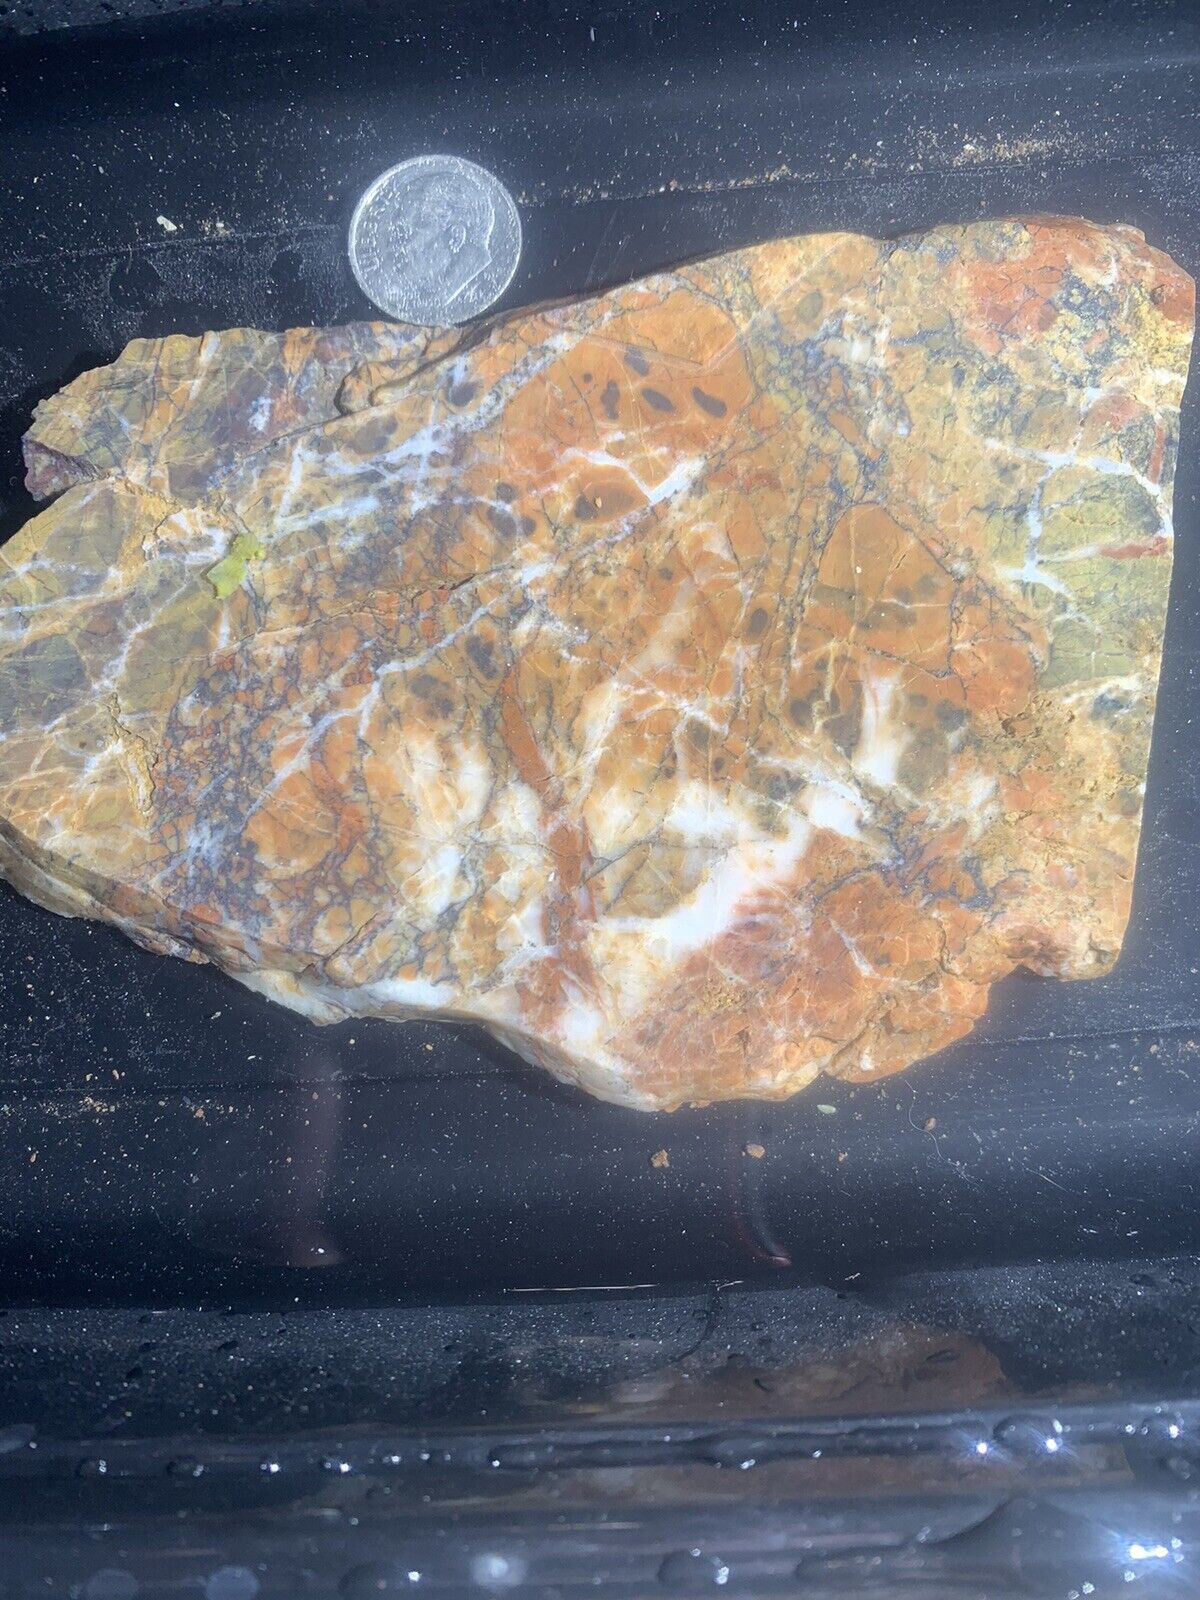 Agate J asper slab From Morgan Hill  Poppy Jasper Formation, Grandpa’s Old Stock